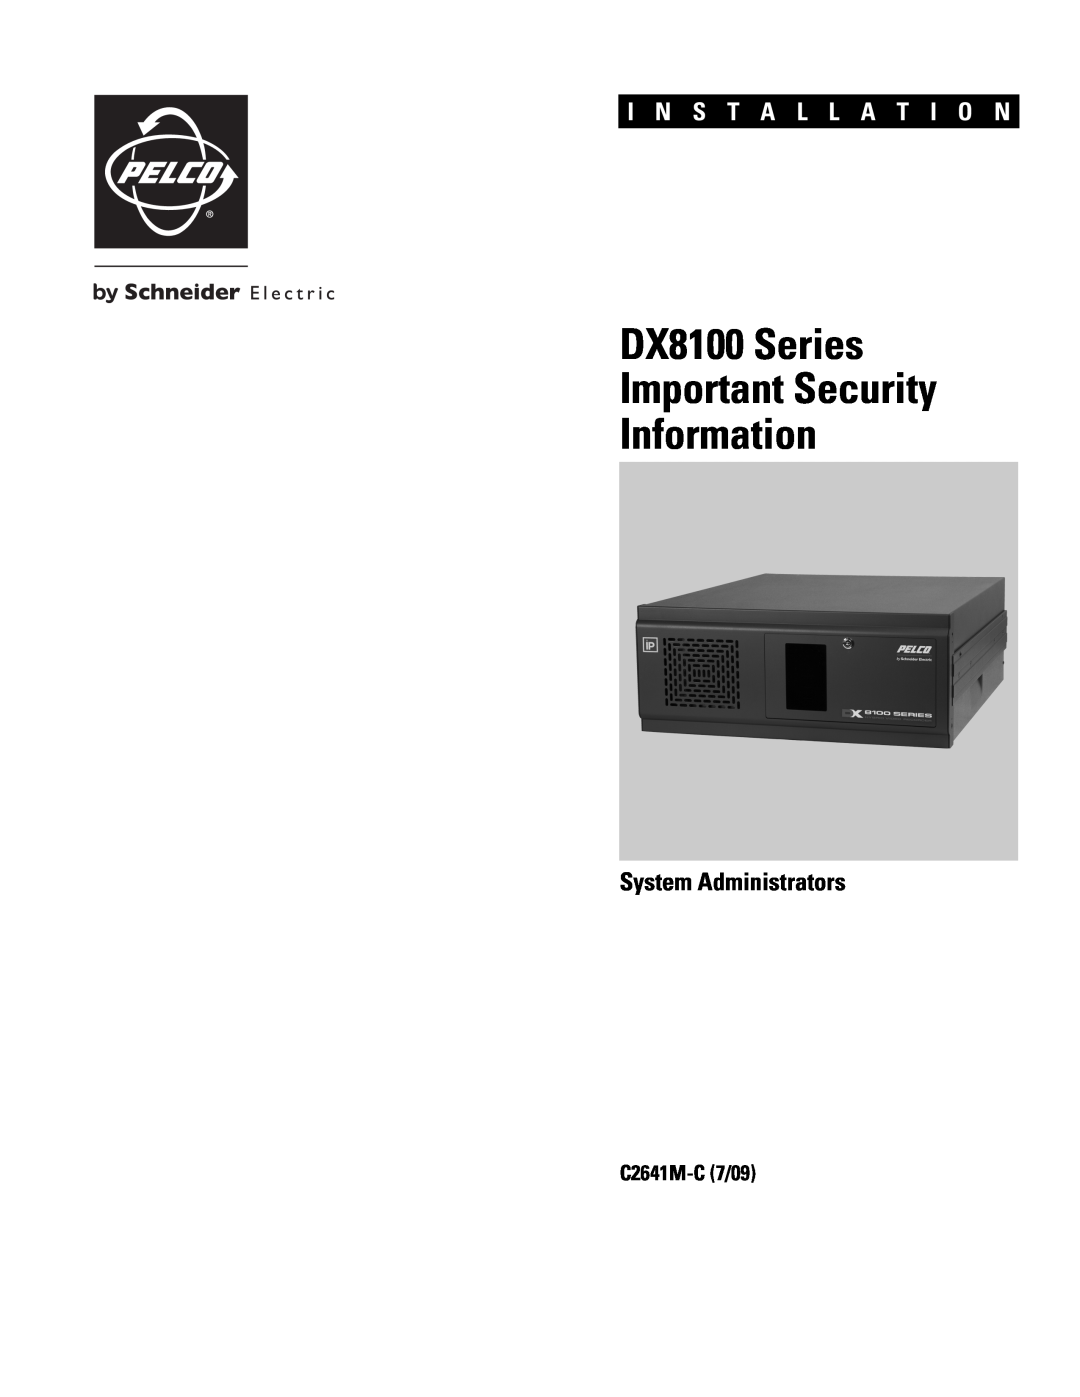 Pelco dx8100 manual C3648M 7/08, DX8100 Series Digital Video Recorder, I N S T A L L A T I O N 